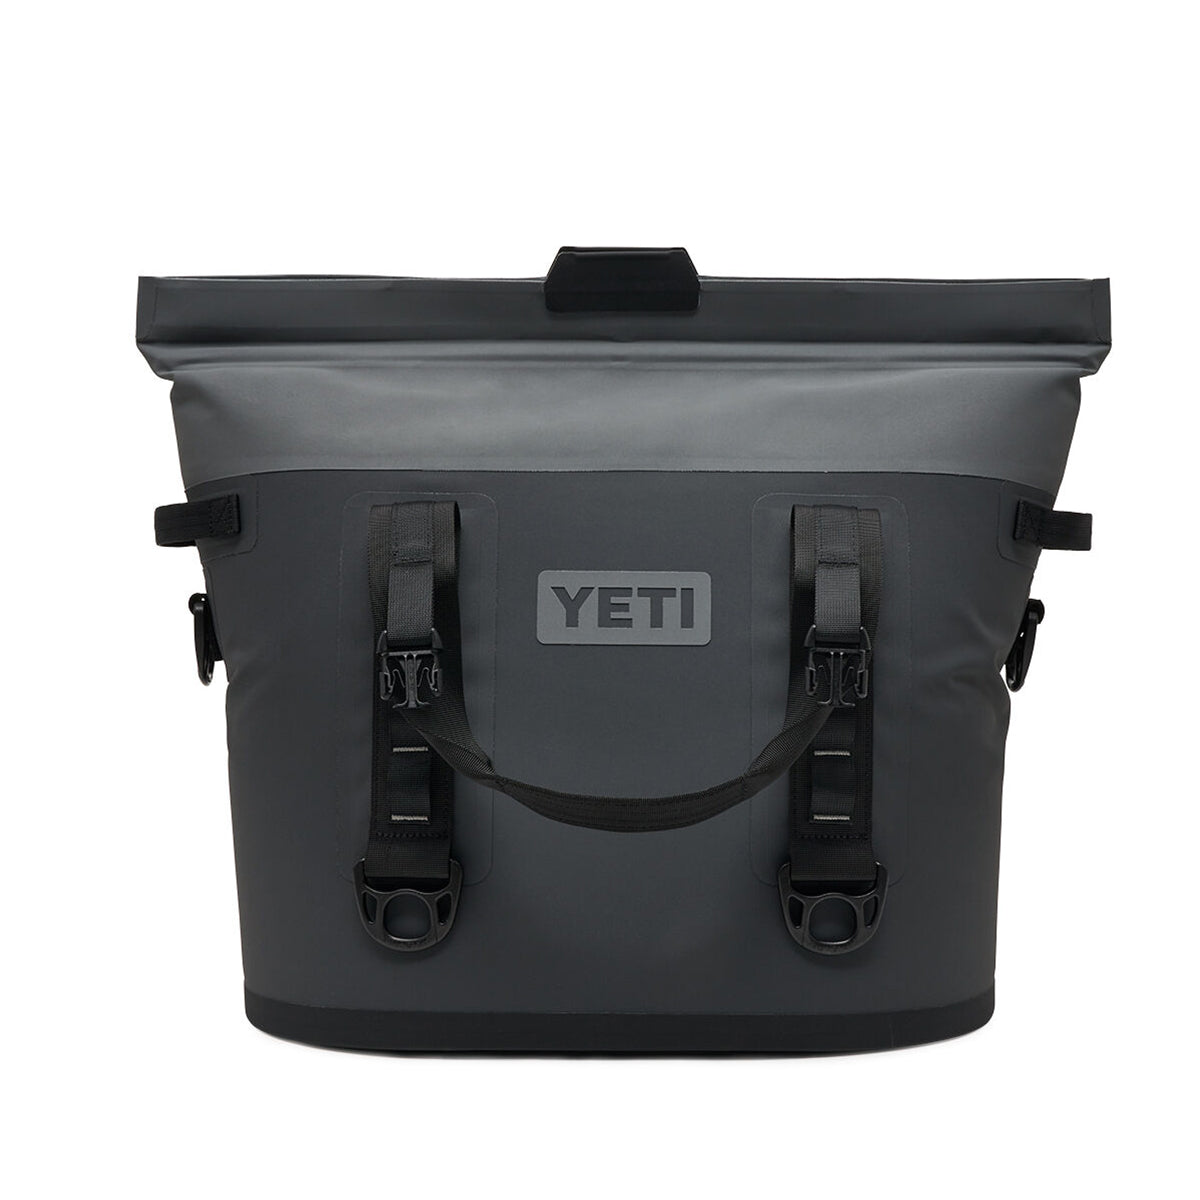 YETI Hopper M30 Soft Cooler (Old Model) in Yeti Hopper M30 Soft Cooler by YETI | Camping - goHUNT Shop by GOHUNT | YETI - GOHUNT Shop